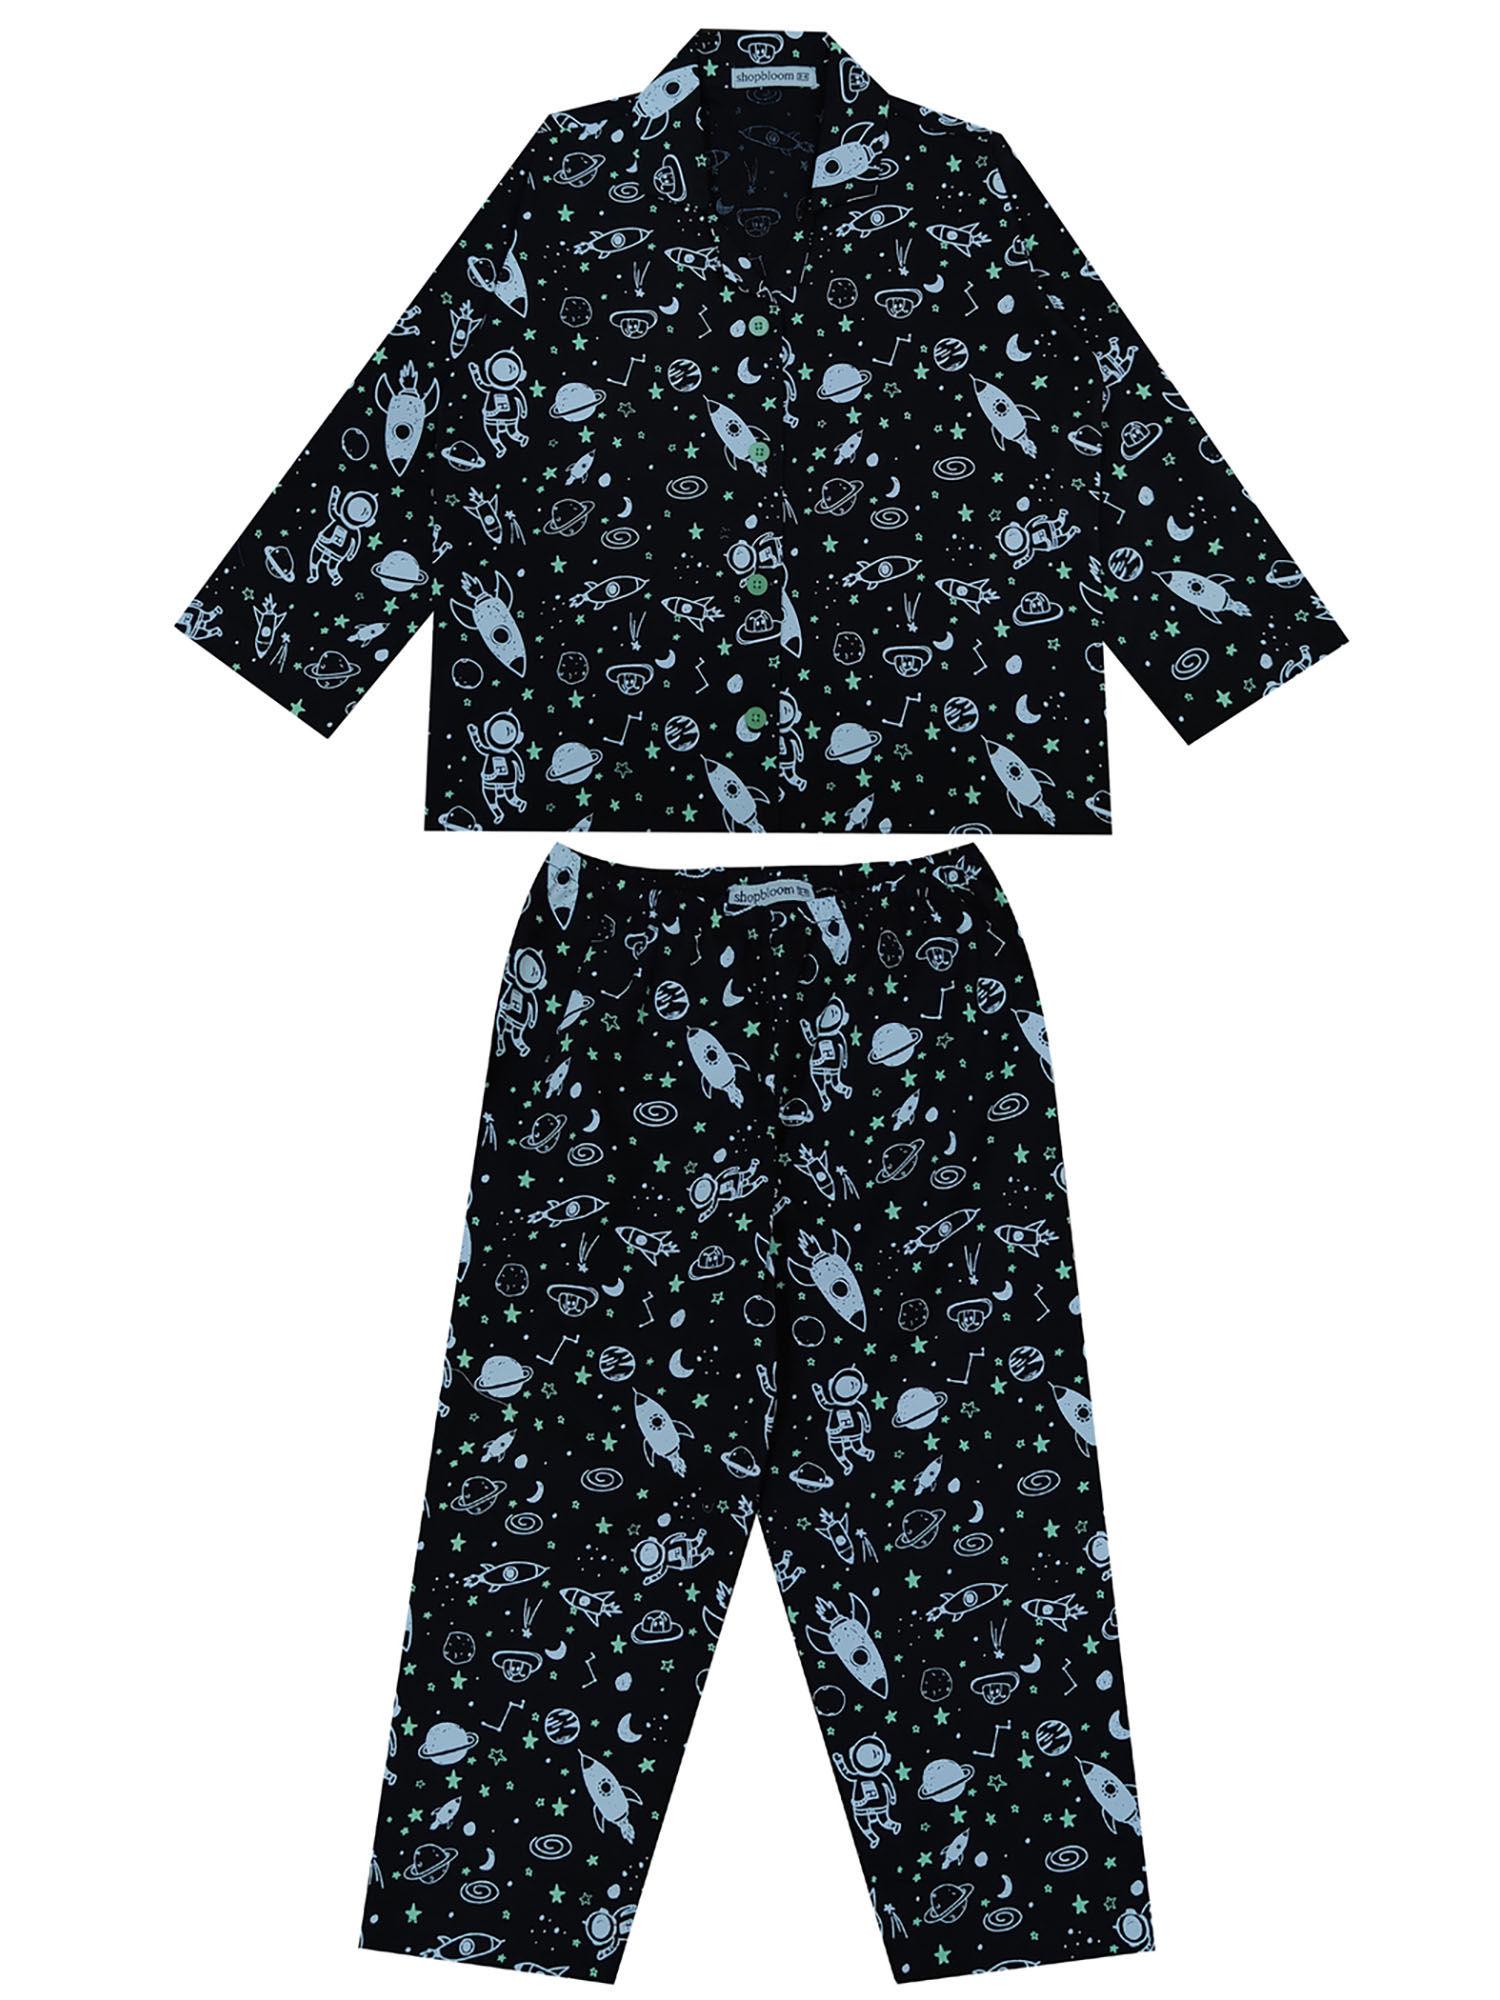 glow in the dark galaxy print long sleeve kids night suit (set of 2)